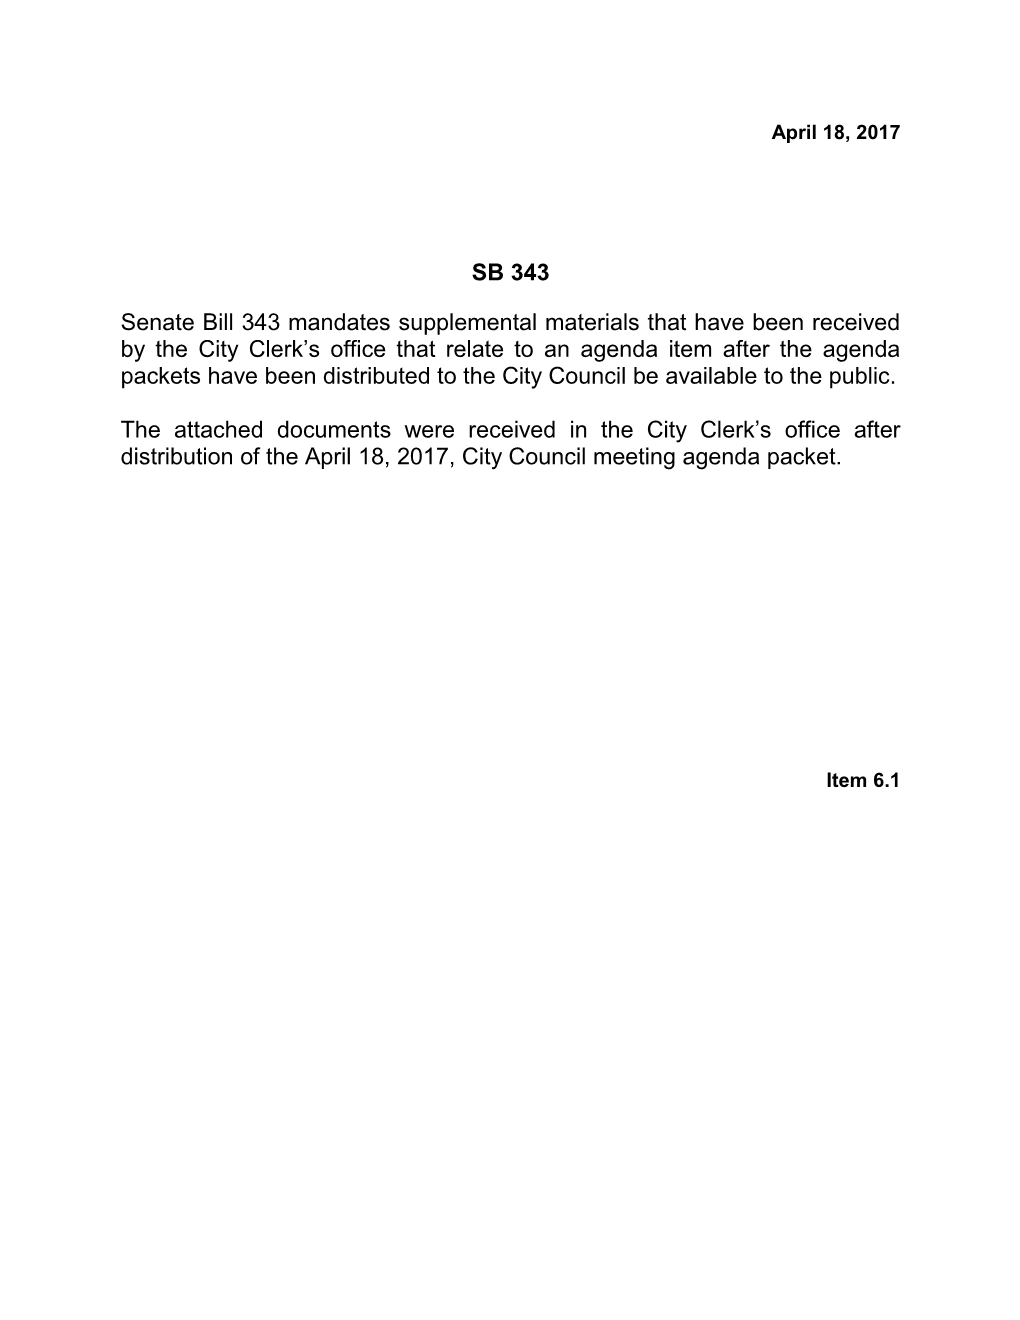 SB 343 Senate Bill 343 Mandates Supplemental Materials That Have